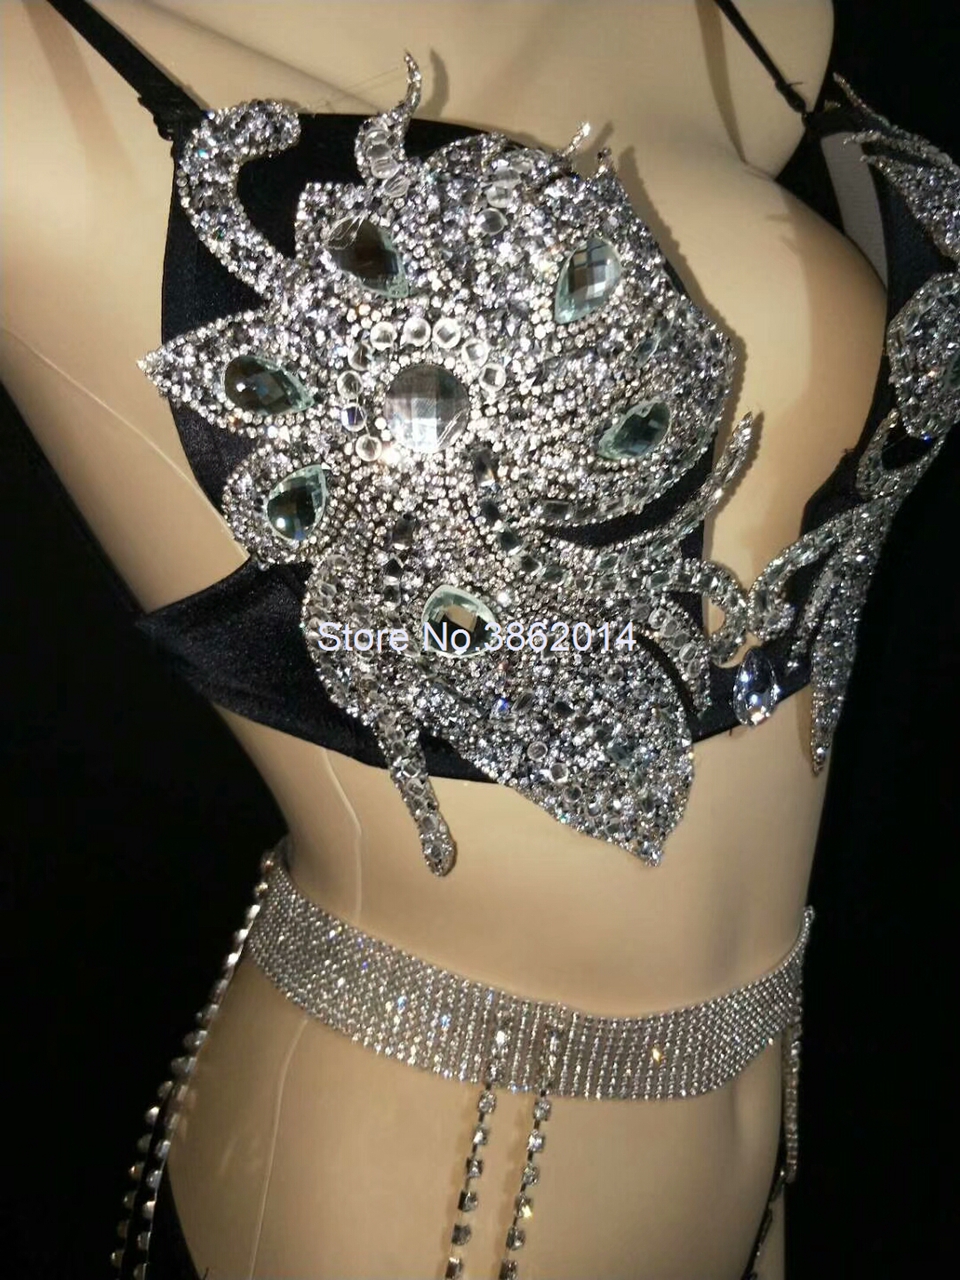 Sparkly Silver Crystals Bikini Set Sexy Bodysuit Women Nightclub Bar Outfit Performance Stage Wear Dance Costume Party Dress